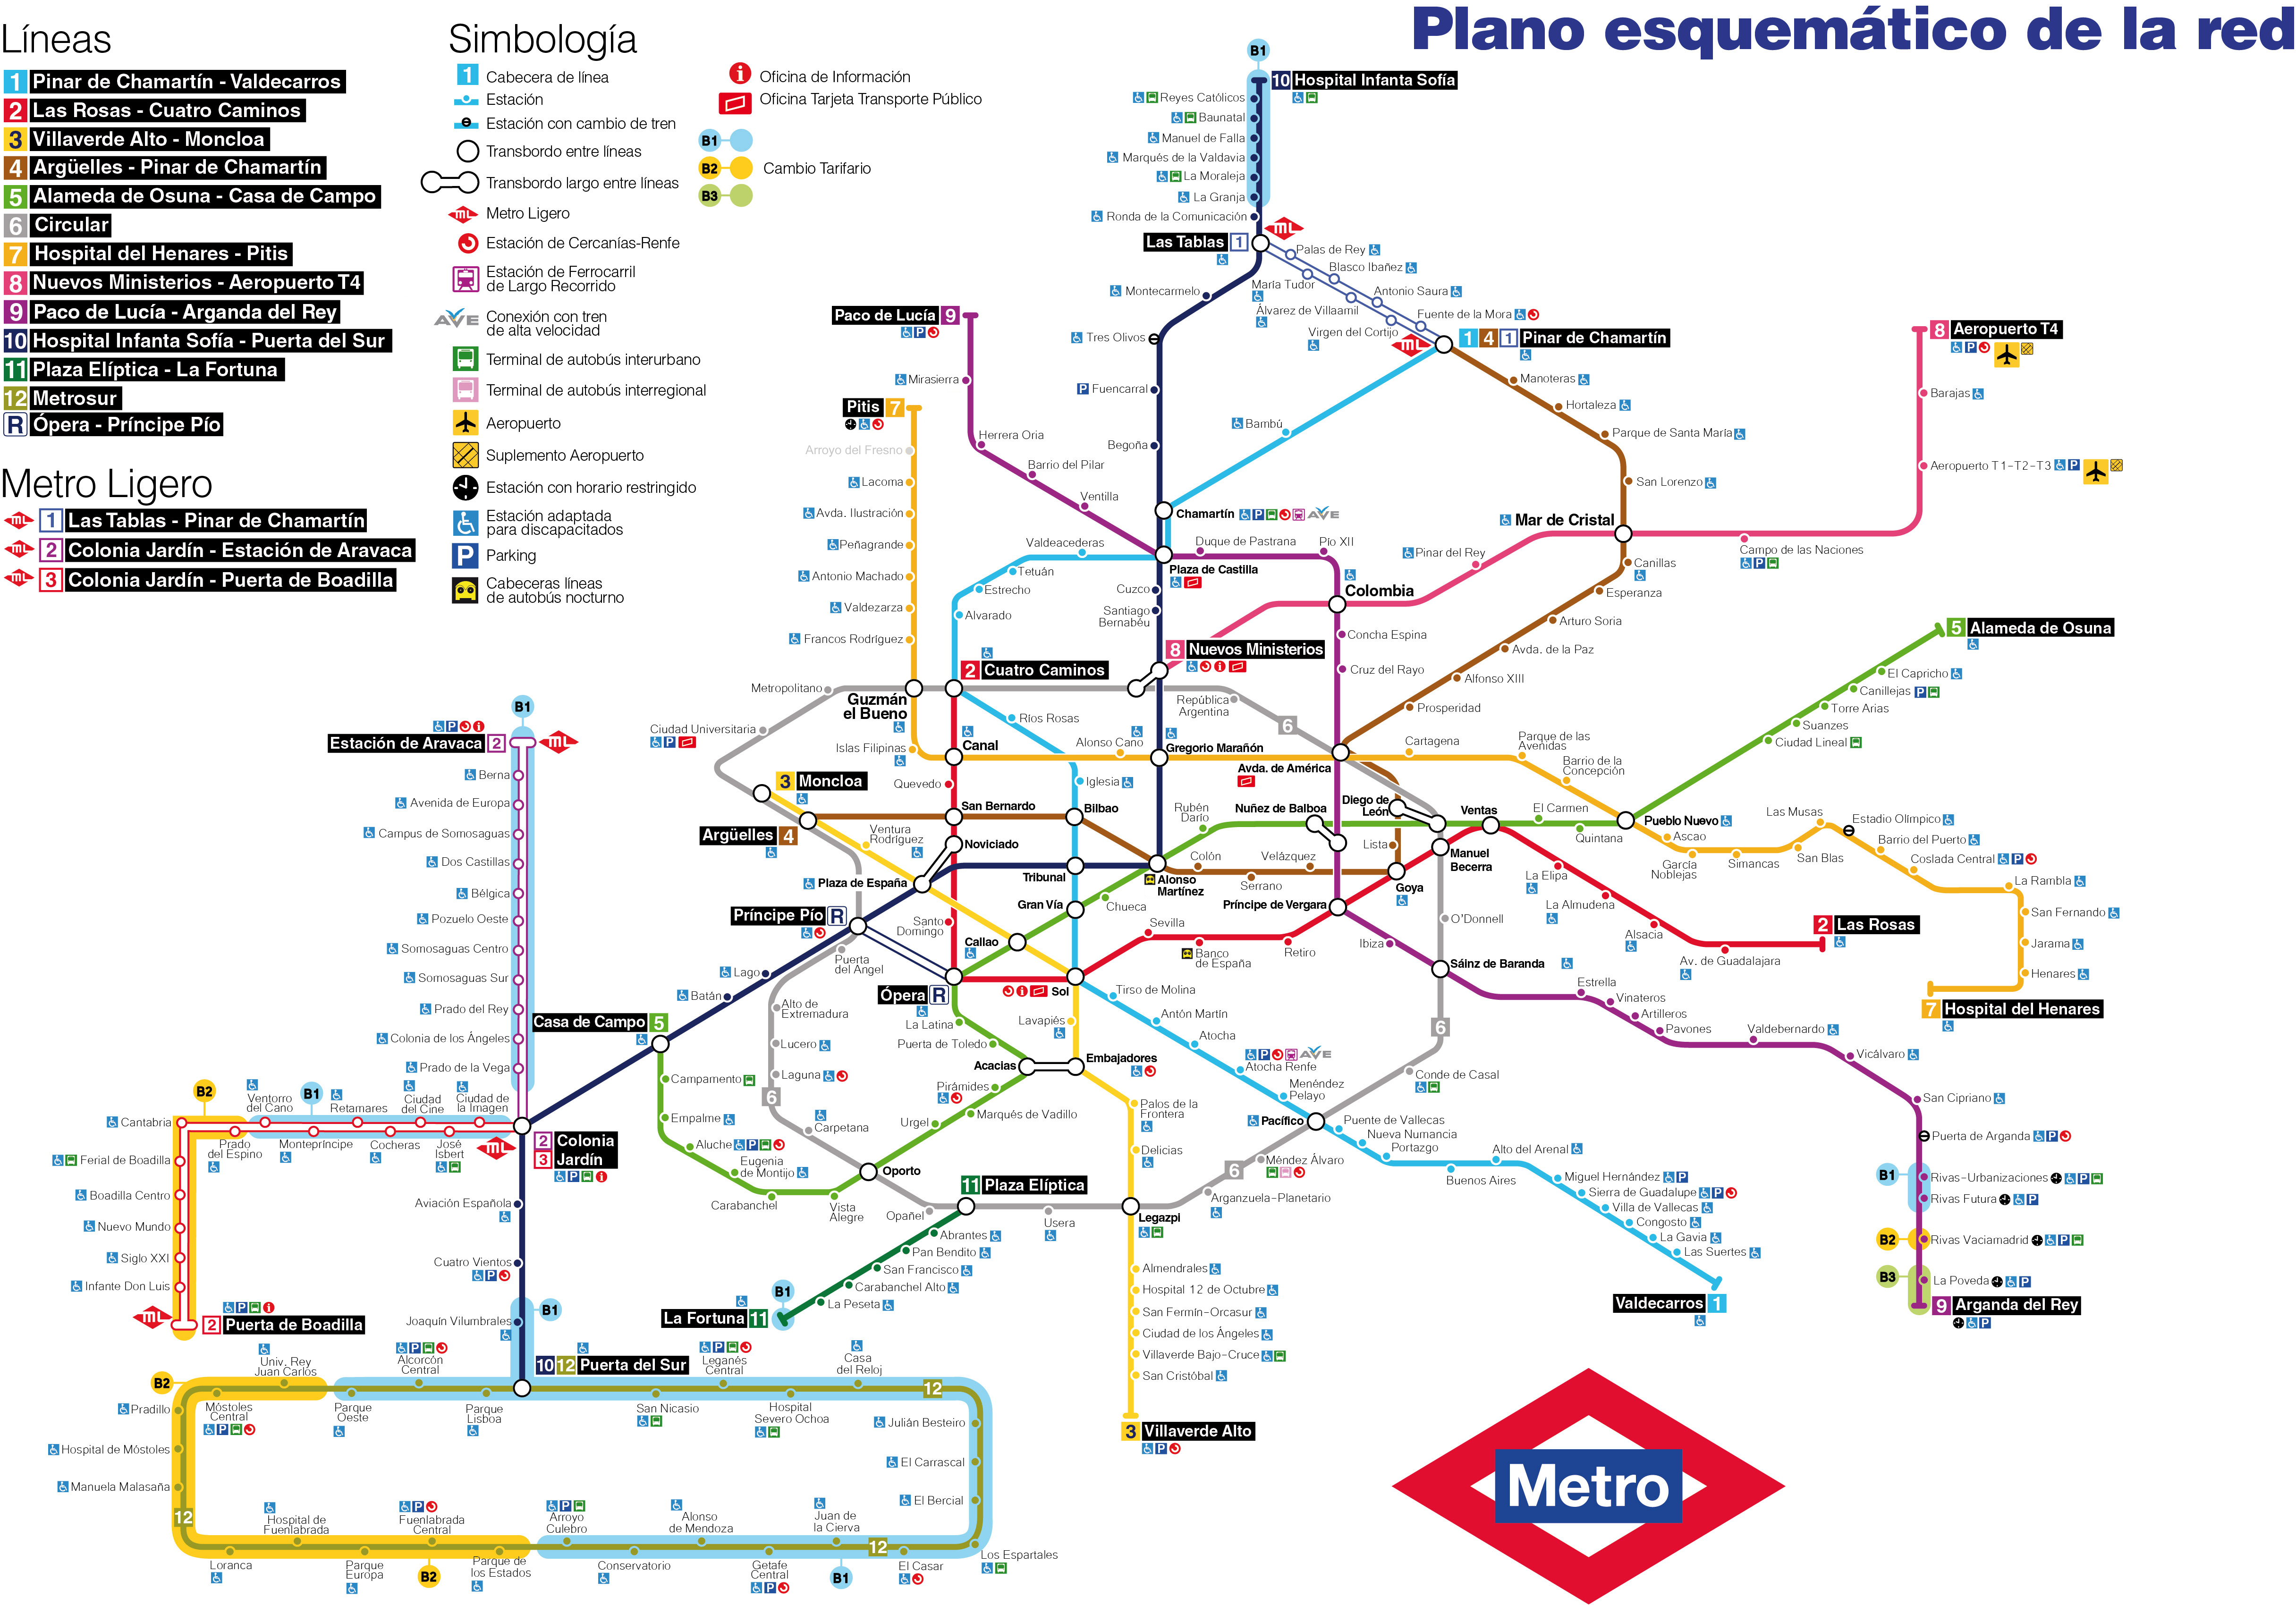 FileMapa esquemático del la red de metro de Madrid.jpg Wikimedia Commons